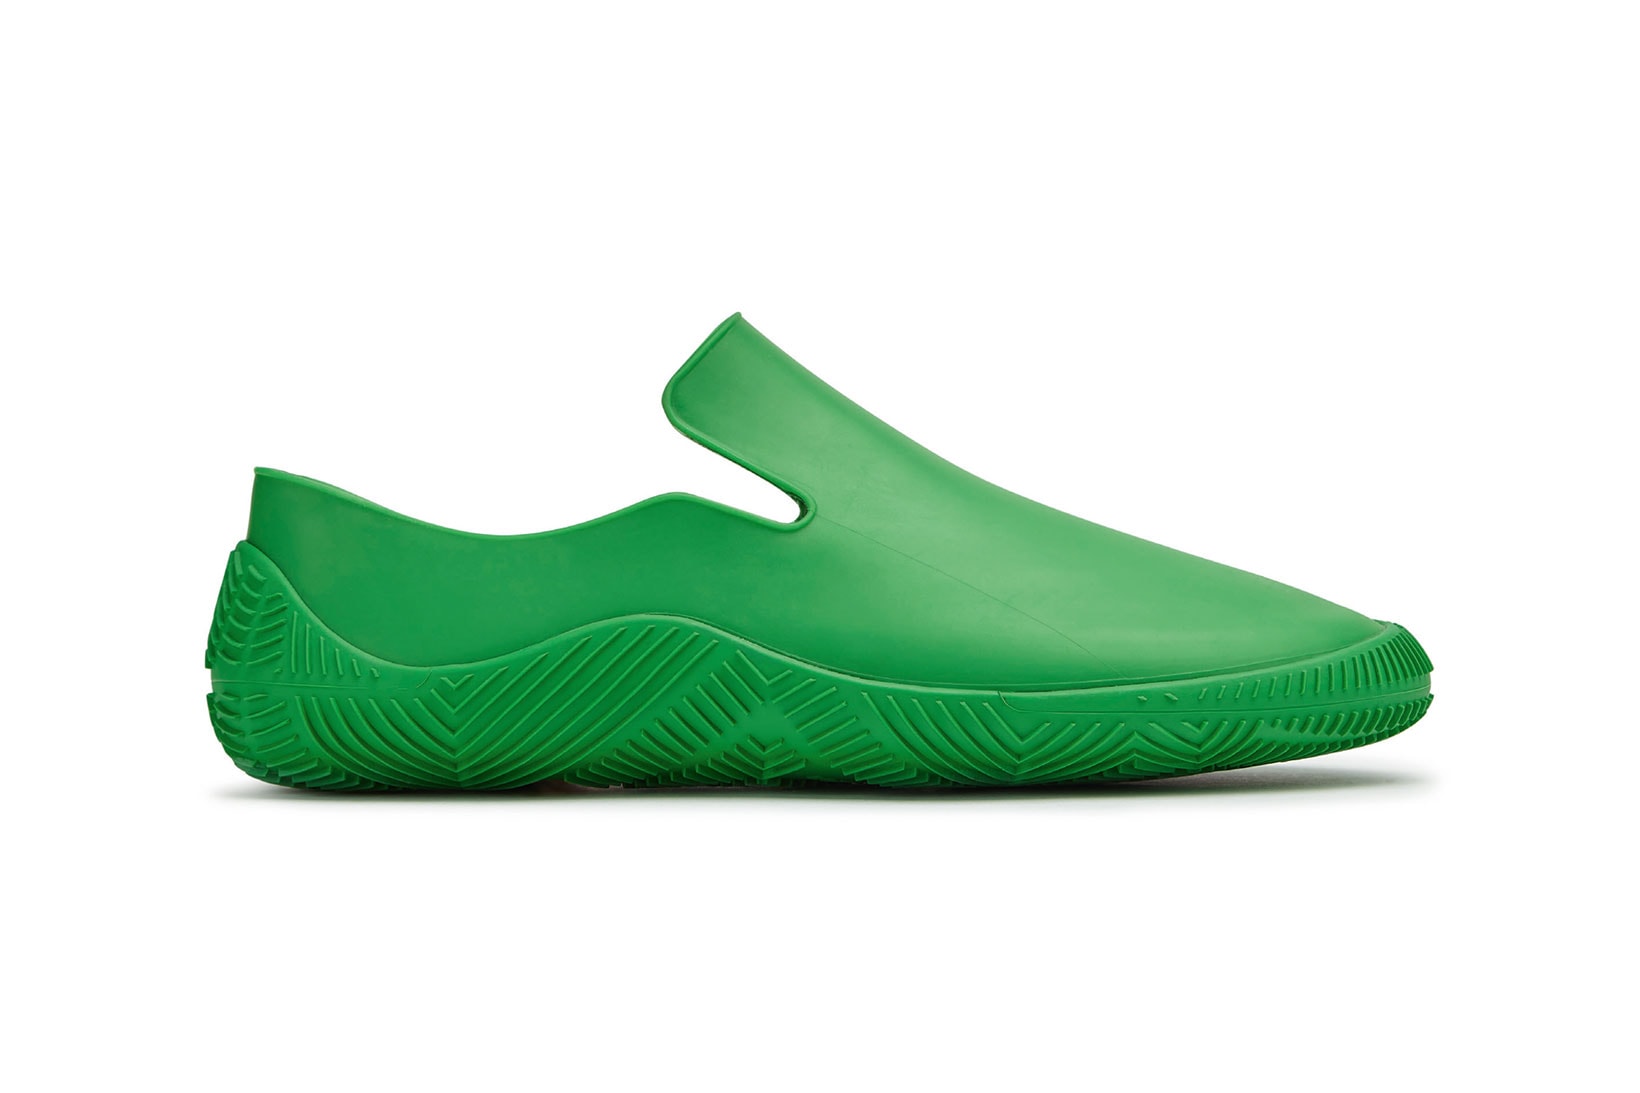 bottega veneta salon 01 footwear collection daniel lee second skin sneakers rubber